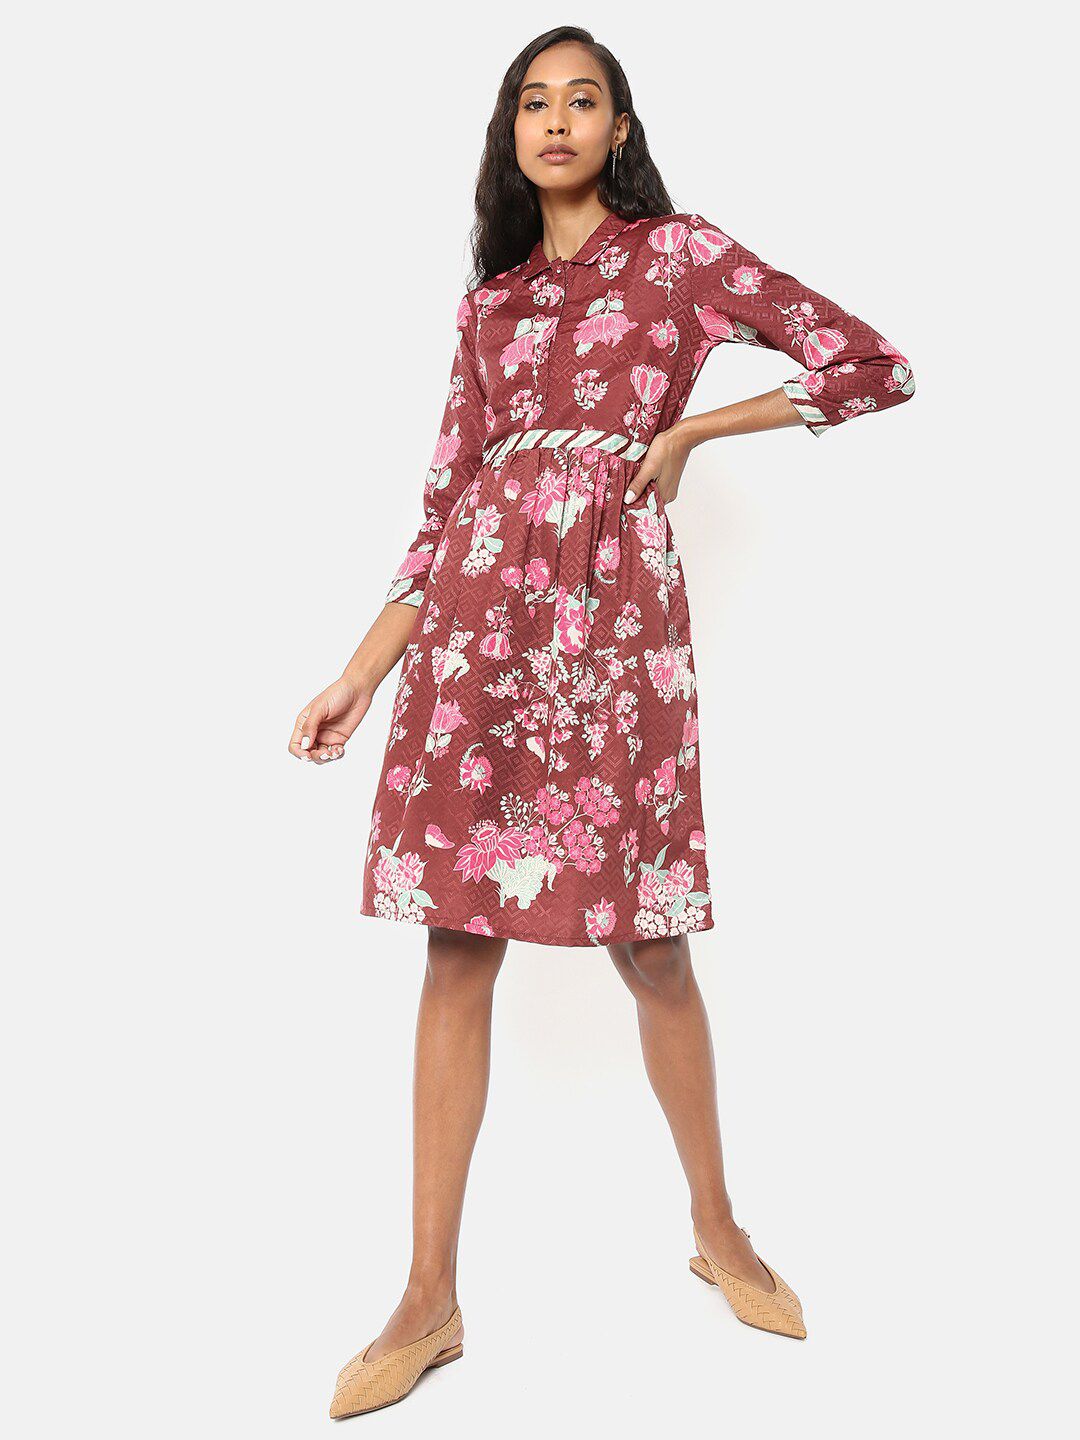 Saaki Brown Floral Dress Price in India